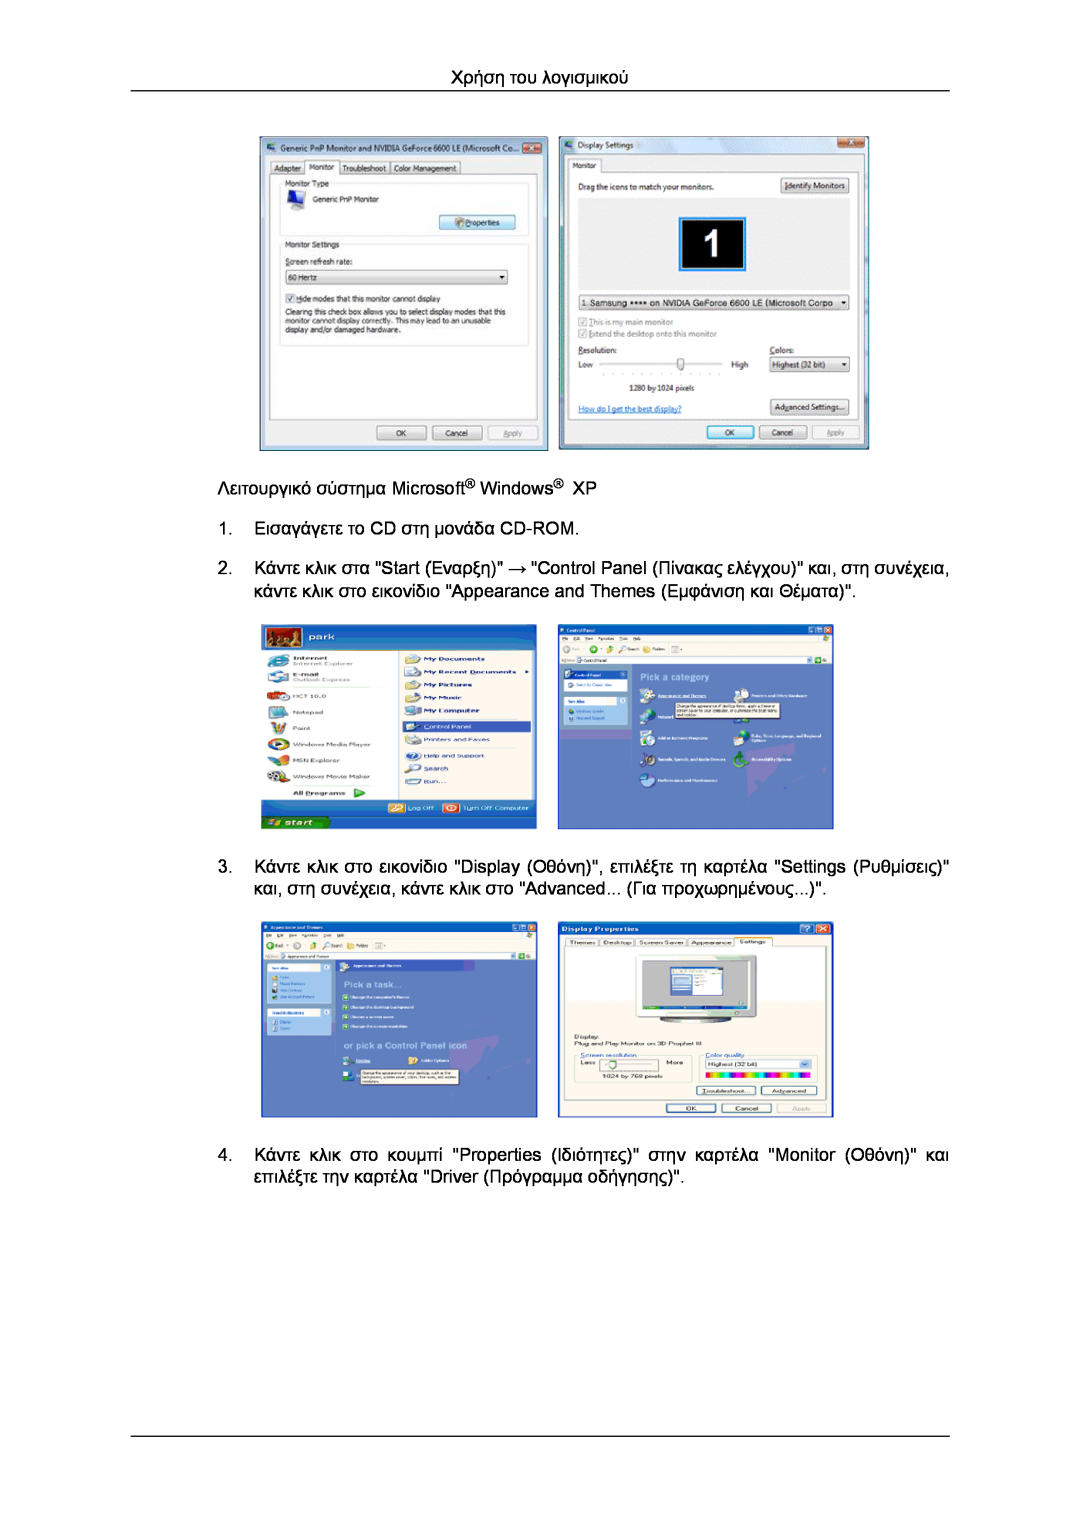 Samsung LS22LFUGF/EN Χρήση του λογισμικού Λειτουργικό σύστημα Microsoft Windows XP, 1. Εισαγάγετε το CD στη μονάδα CD-ROM 